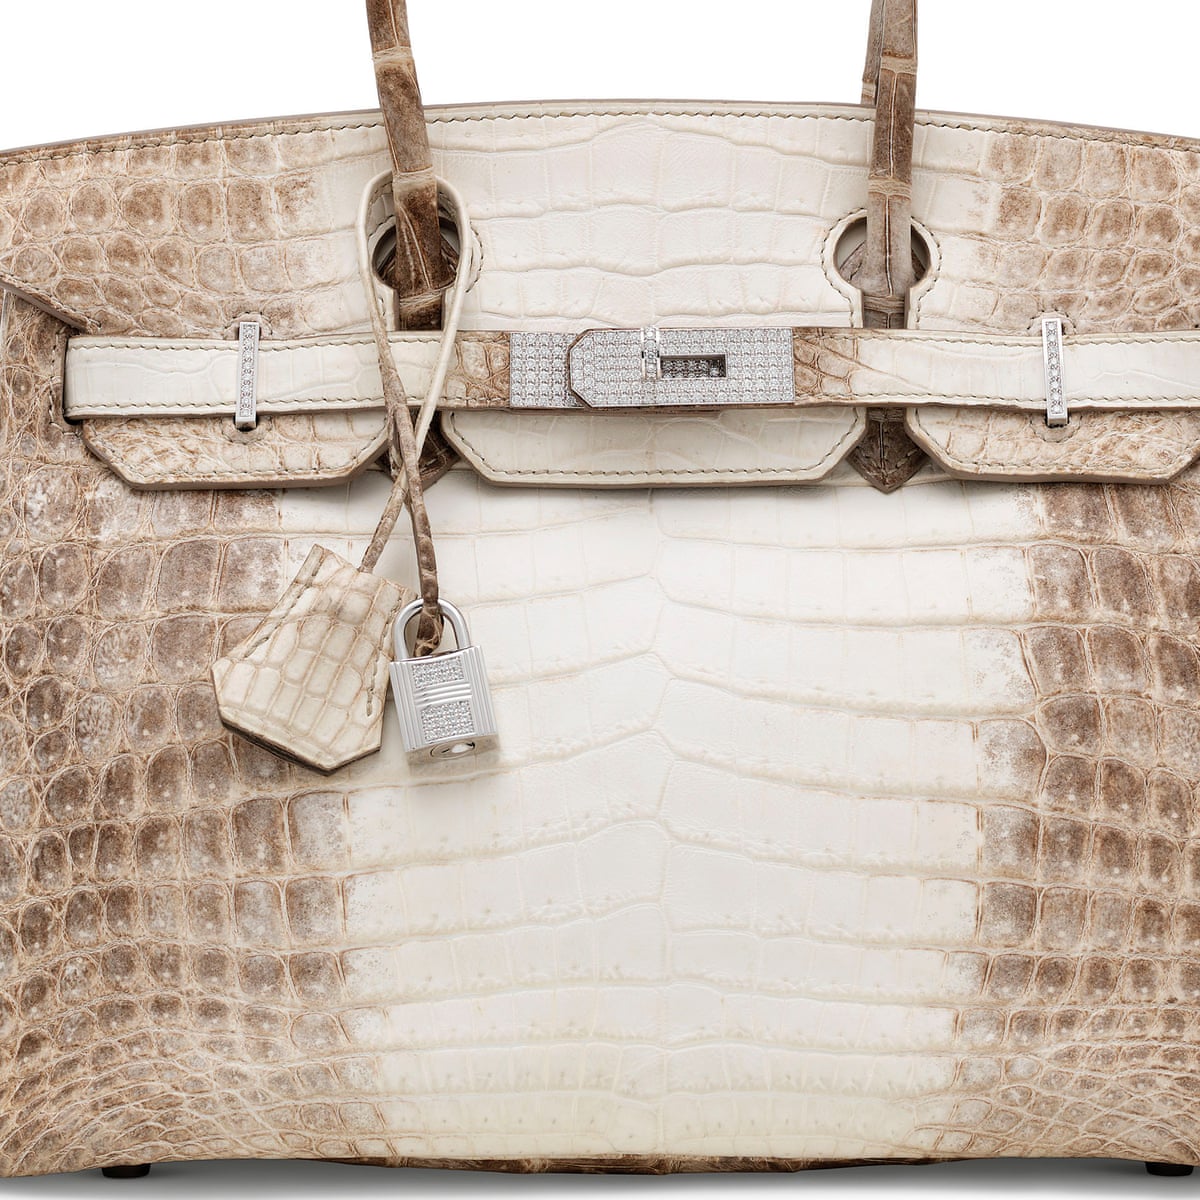 Vintage Hermès Birkin bag sells for record £162,500 in London, Hermès